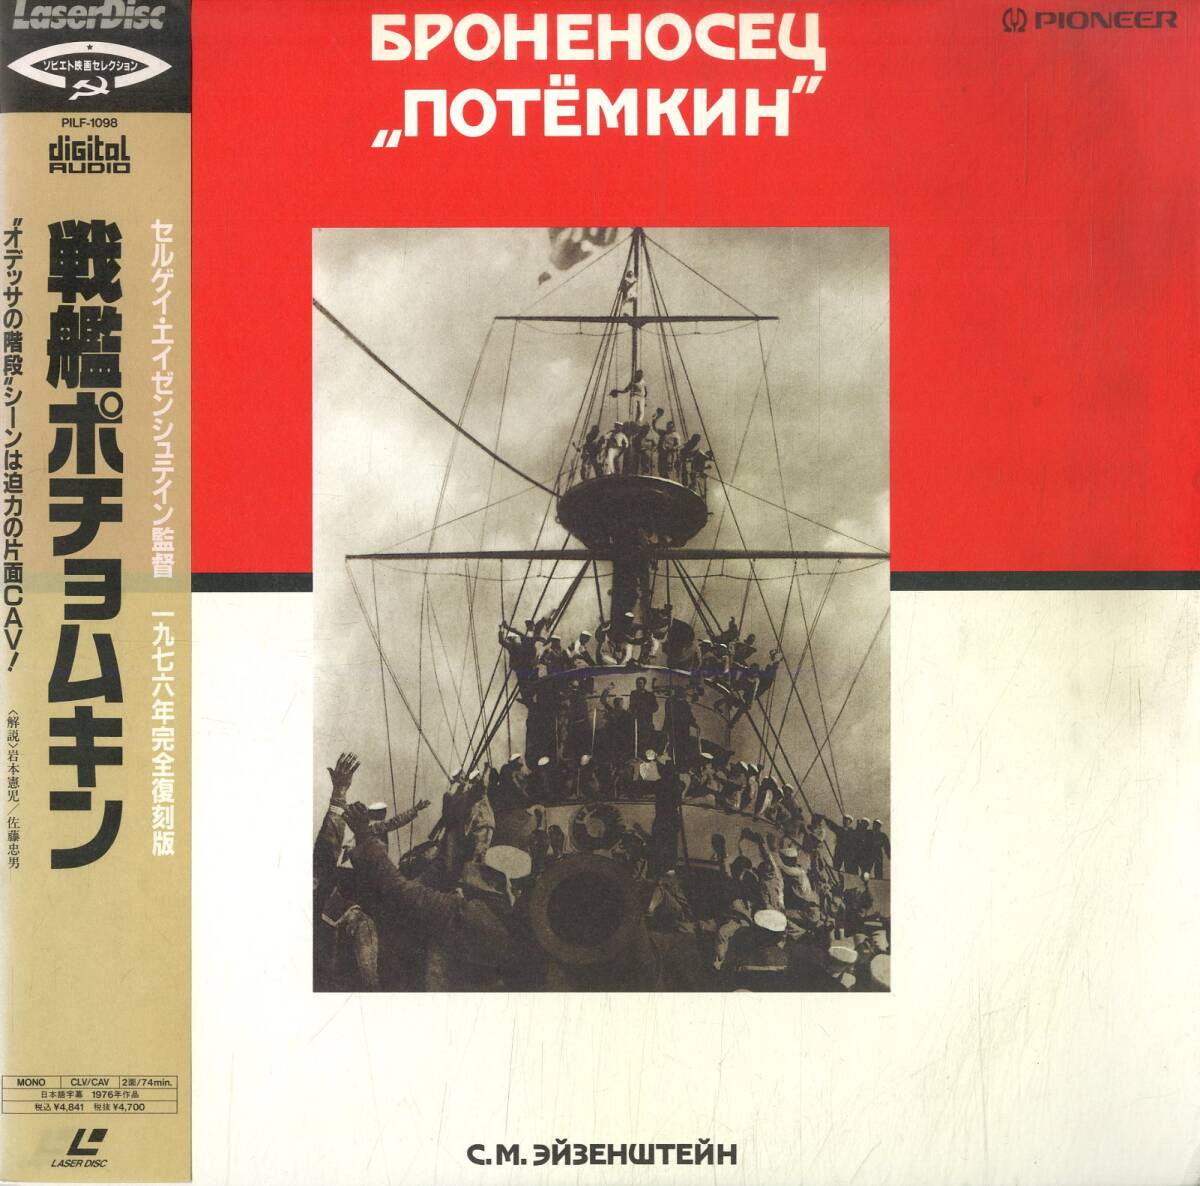 B00173900/LD/アレクサンドル・アントノフ「戦艦ポチョムキン(1976年完全復刻版)」の画像1